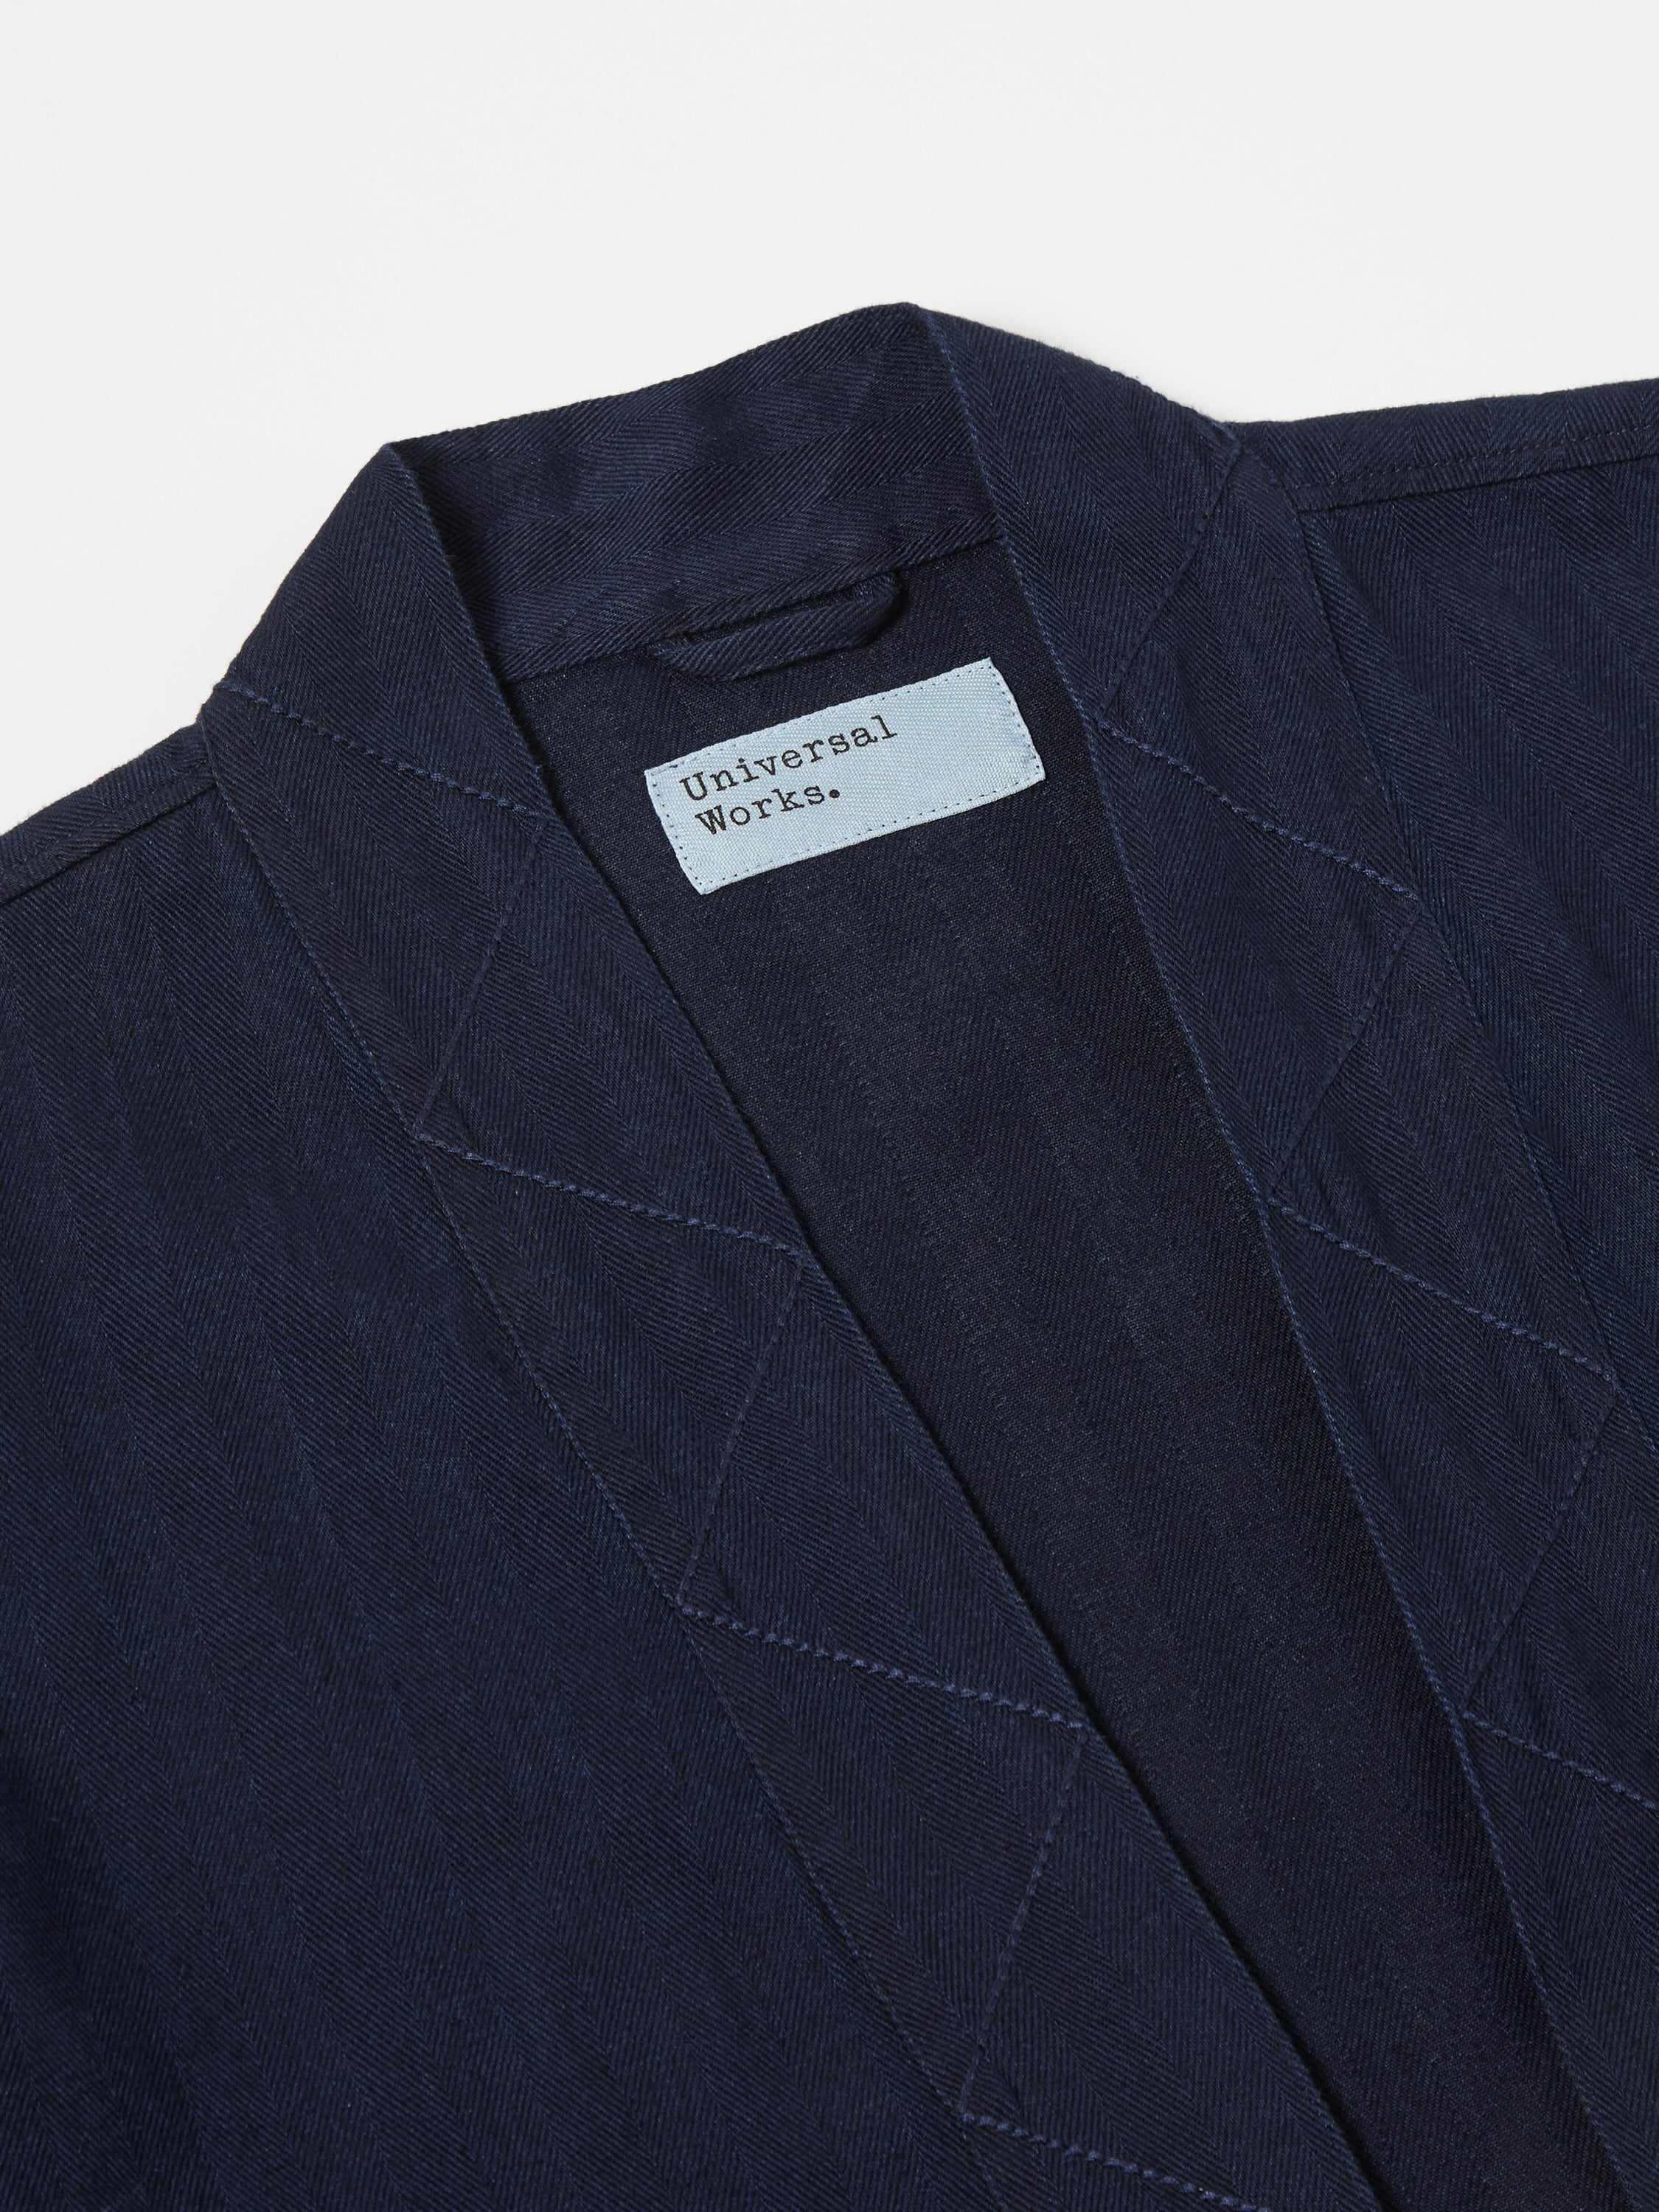 Universal Works Tie Front Jacket in Indigo Herringbone Denim